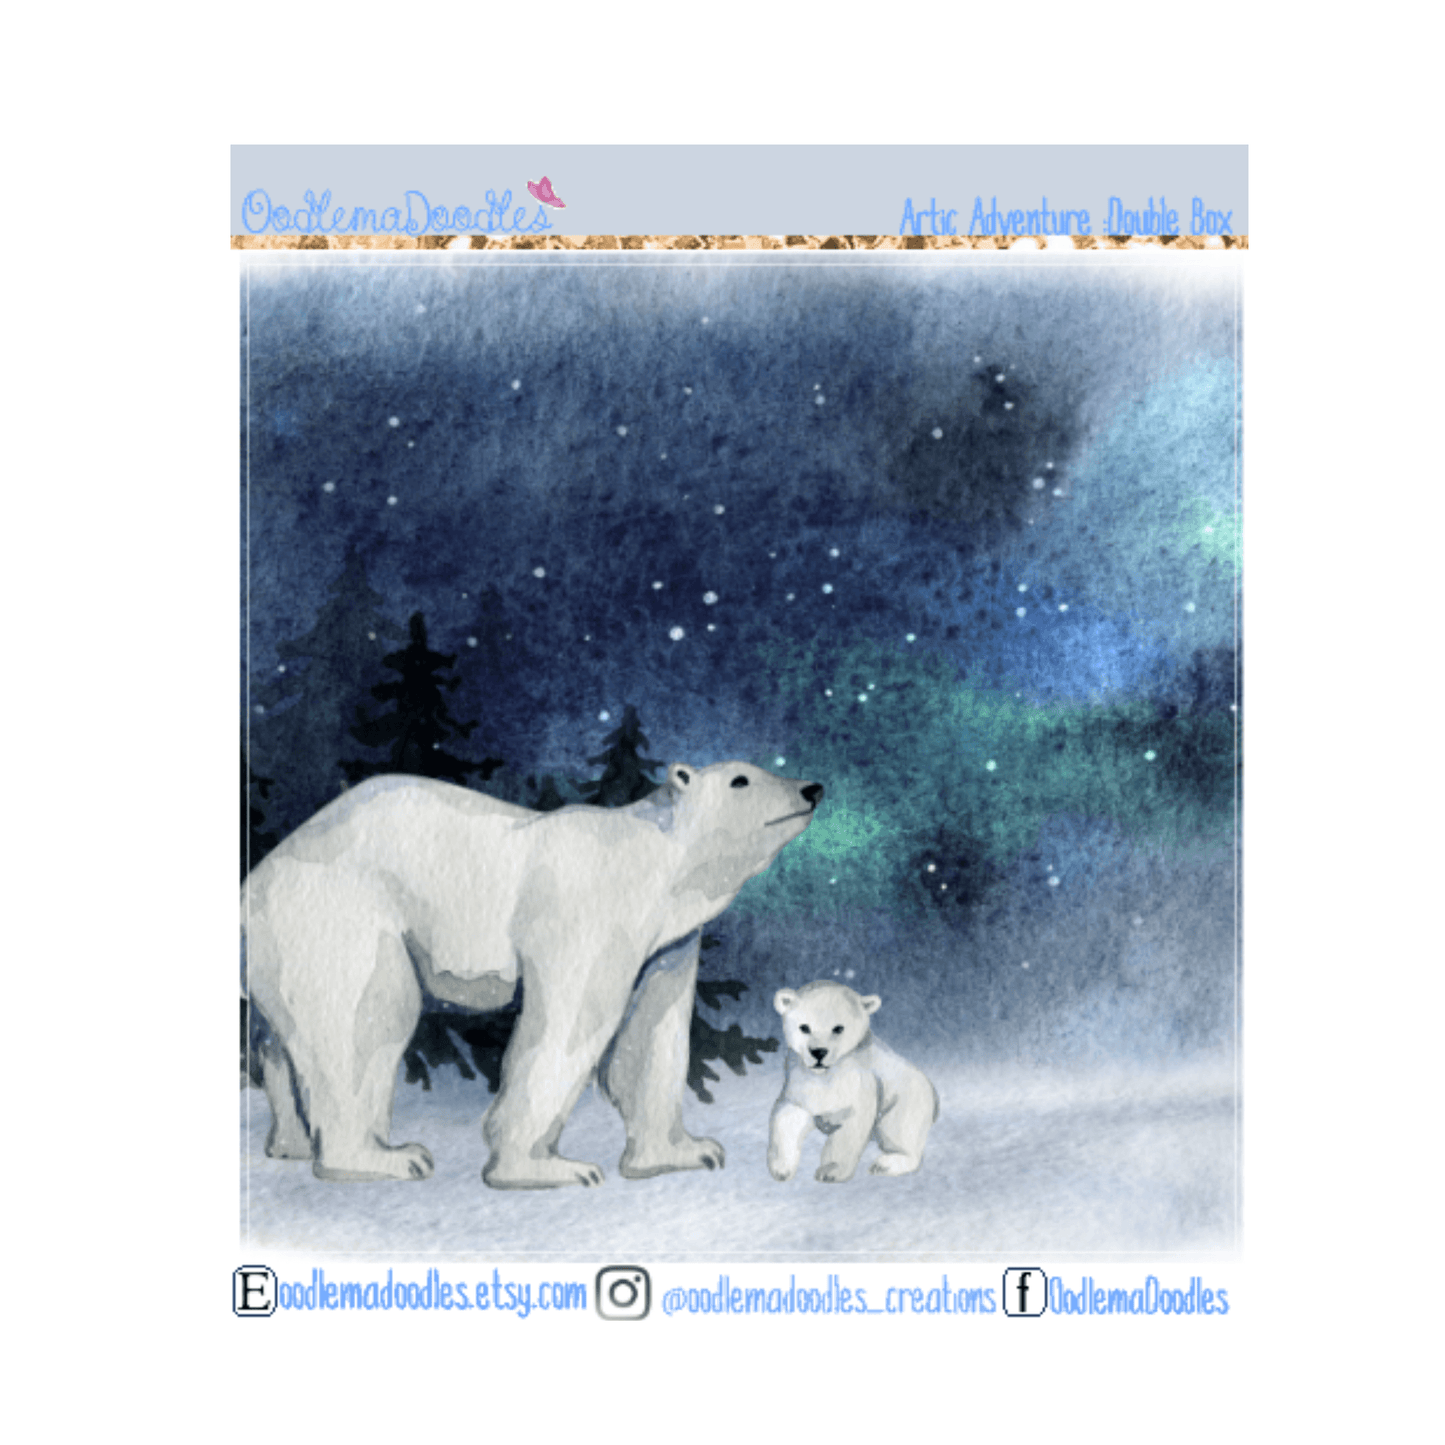 Arctic Adventure Decorative Double Box Sticker - oodlemadoodles